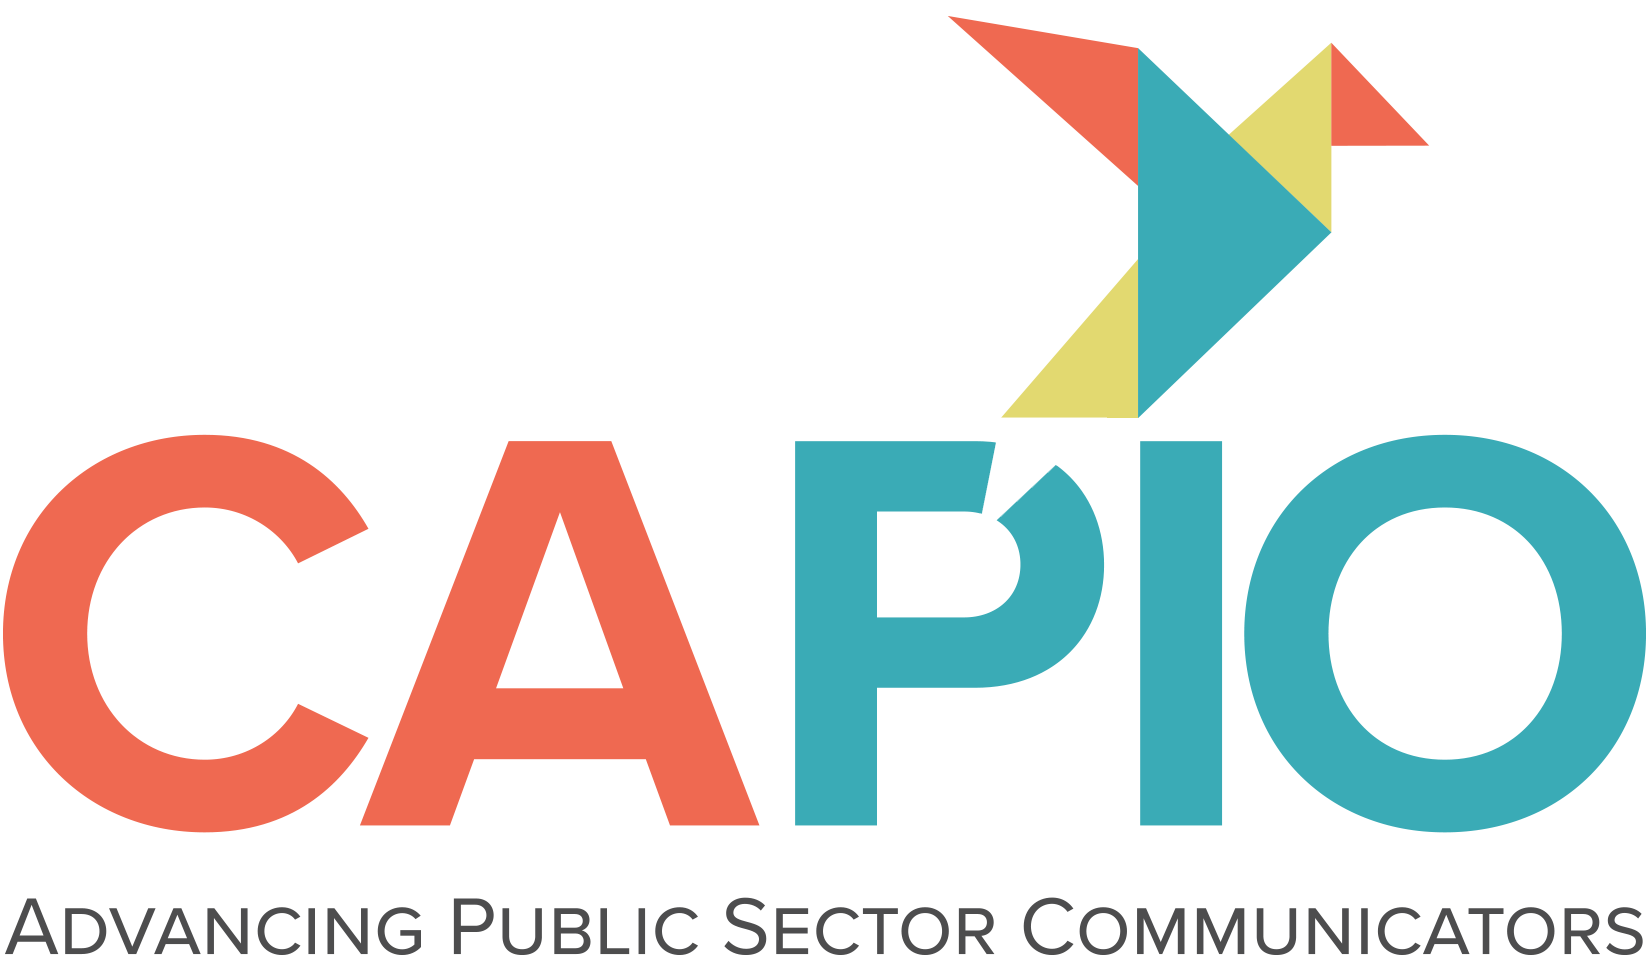 California Association of Public Information Officials logo